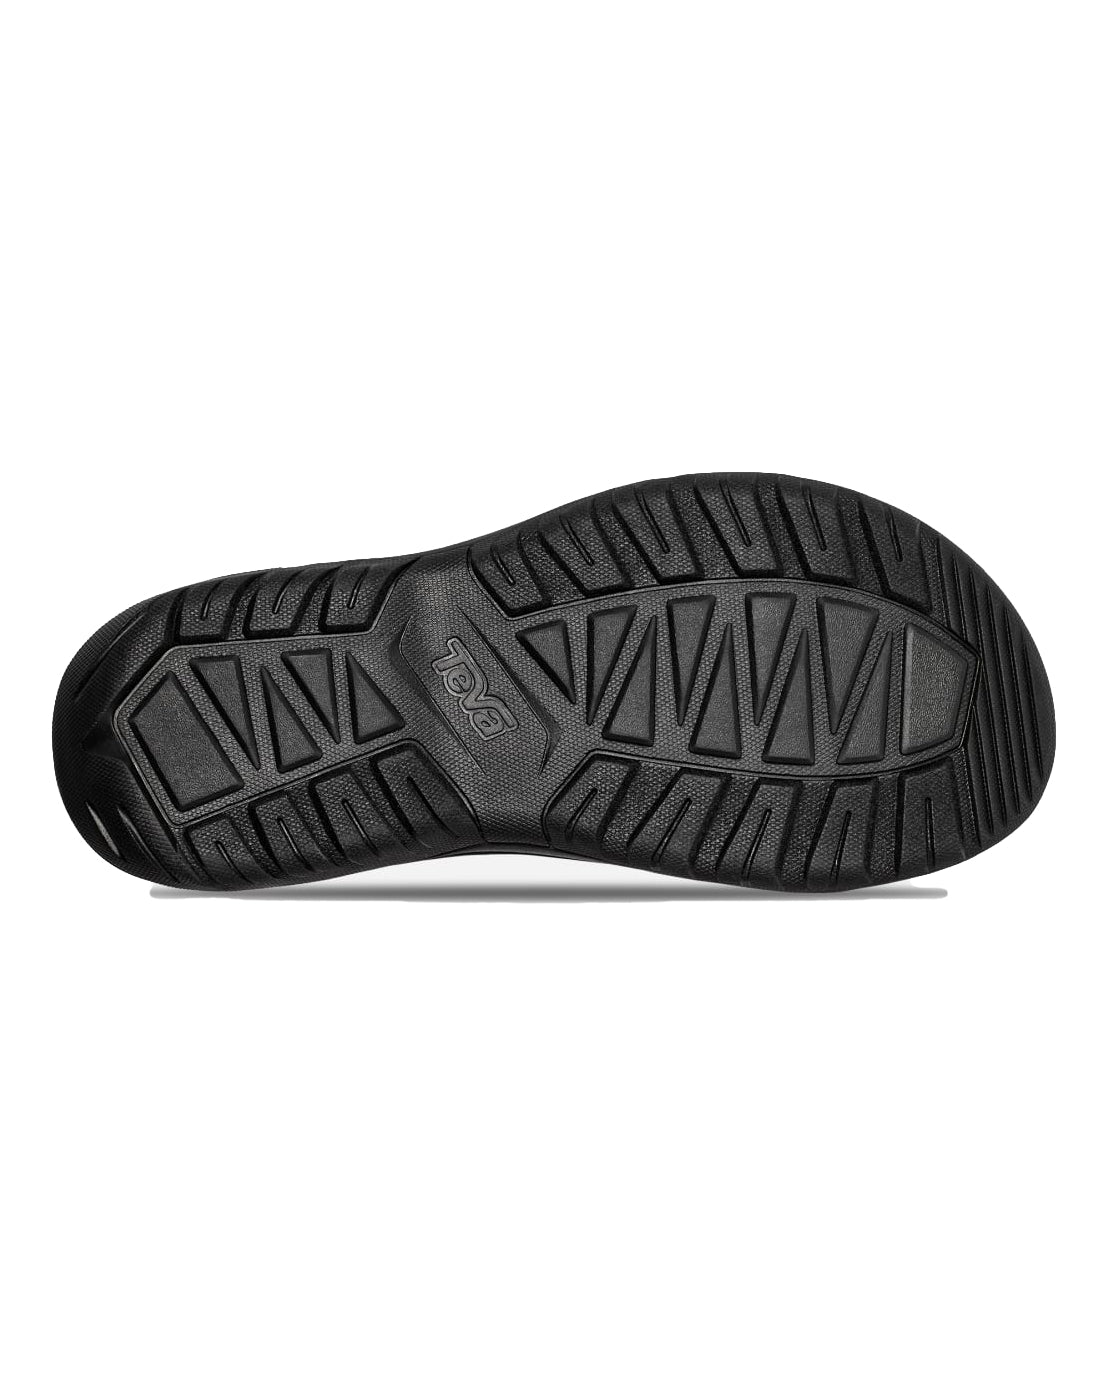 W Hurricane XLT2 Sandals - Black/Black